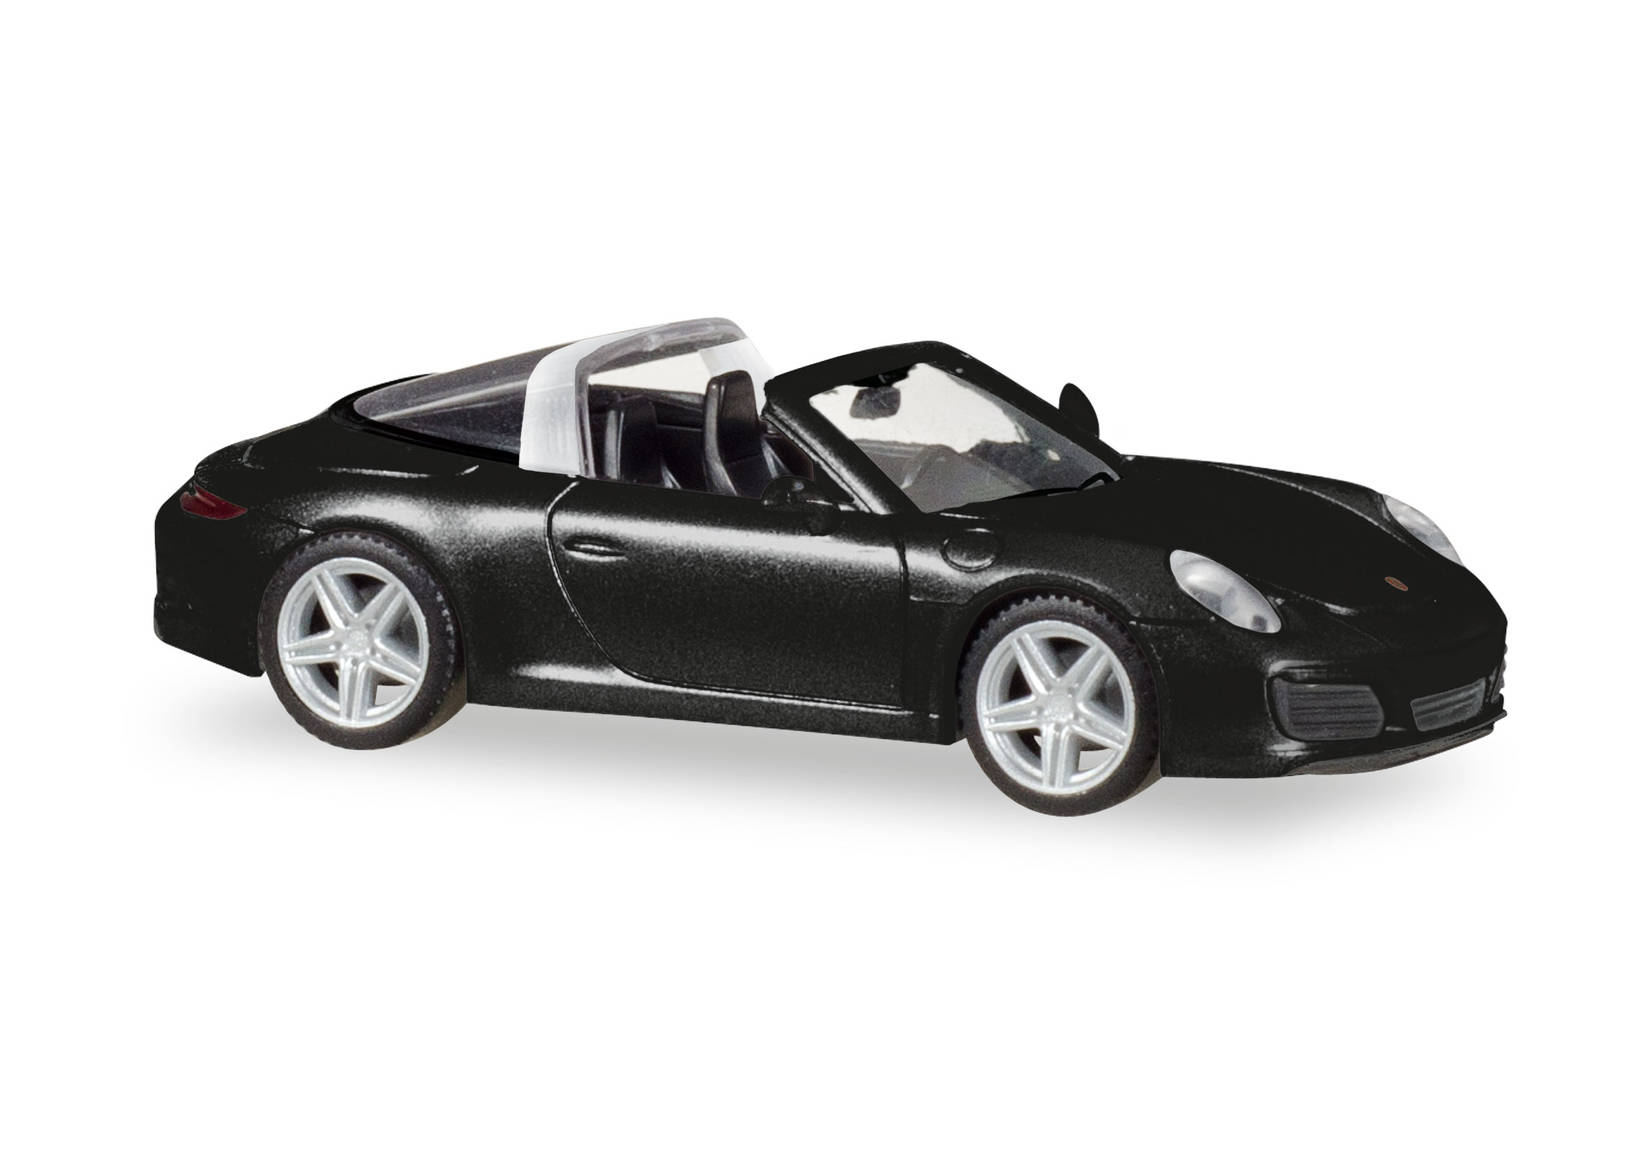 Porsche 911 Targa 4S, black